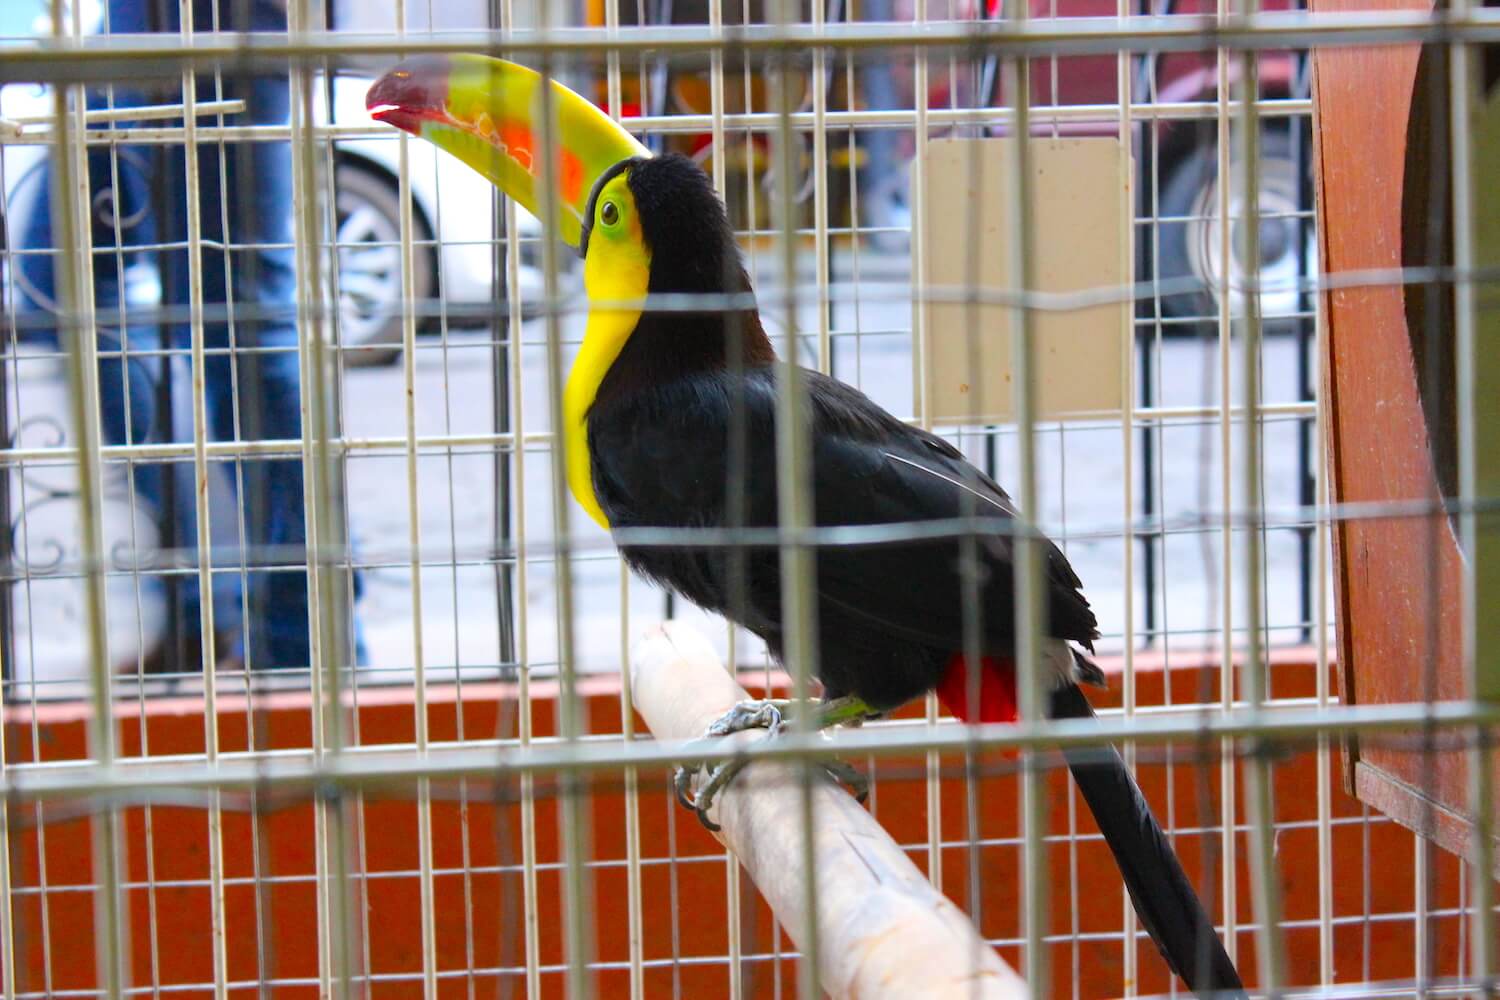 toucan i saw in puebla pet shop